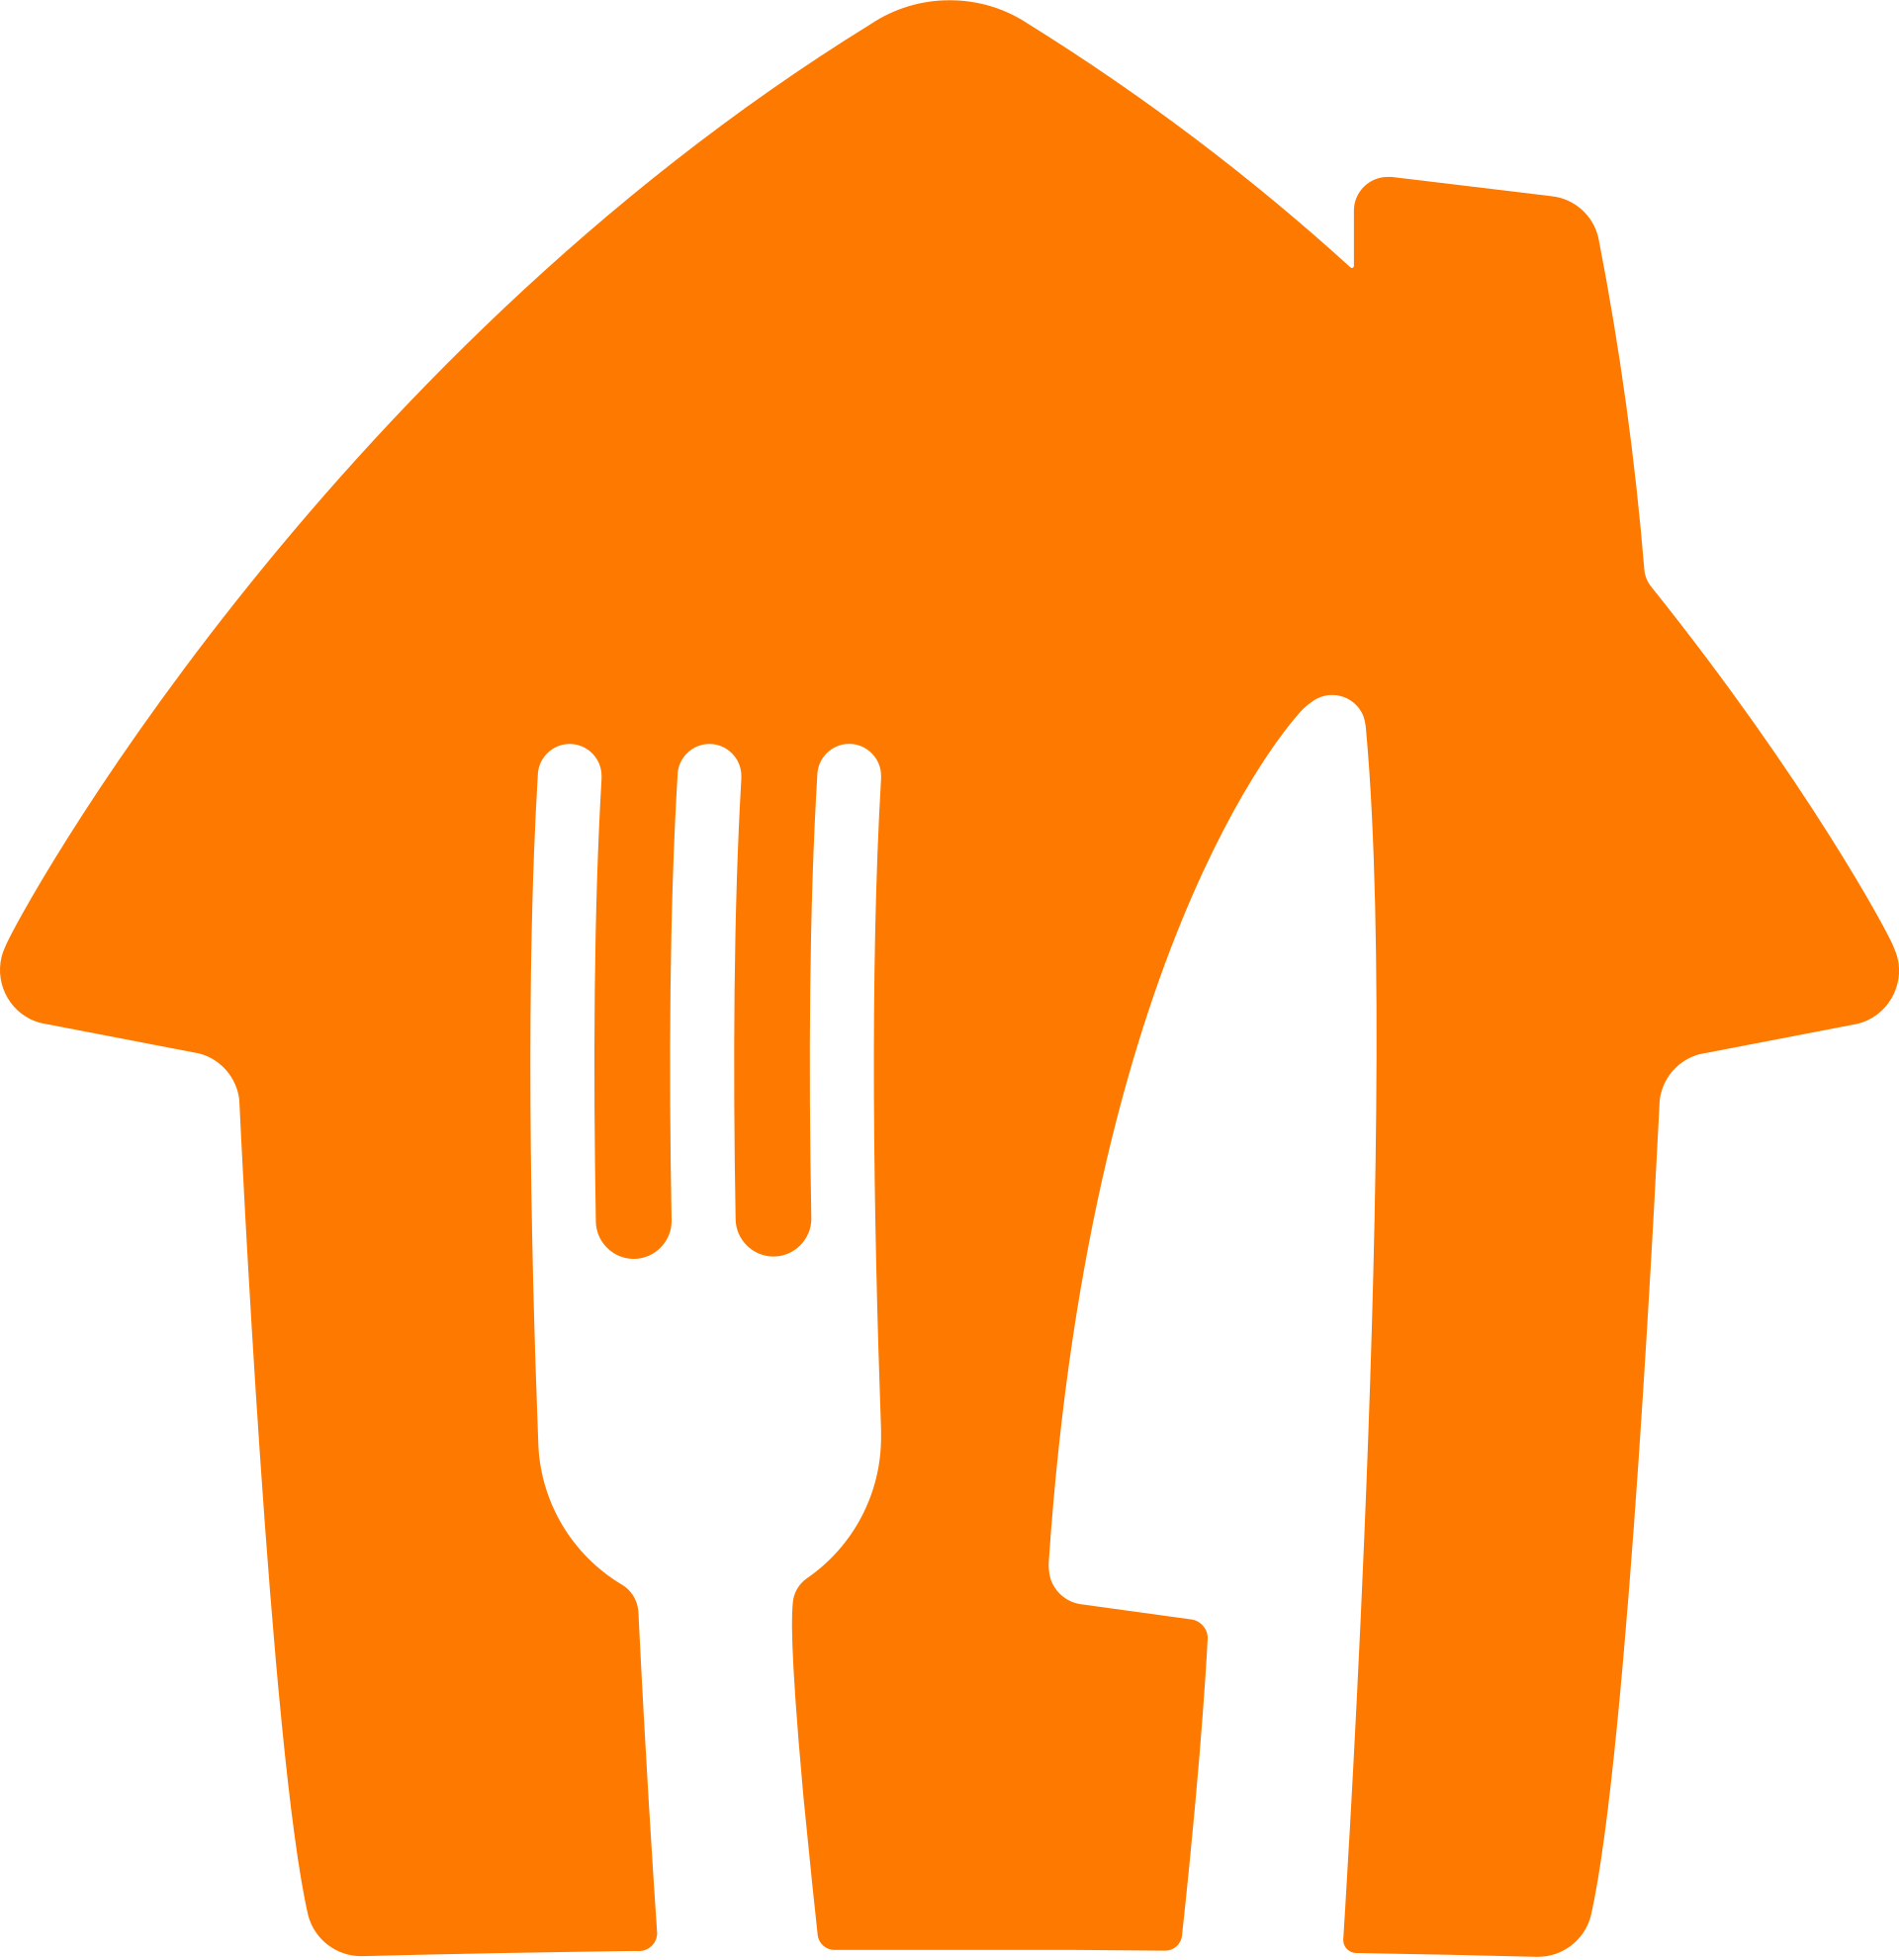 Just Eat Takeaway Logo